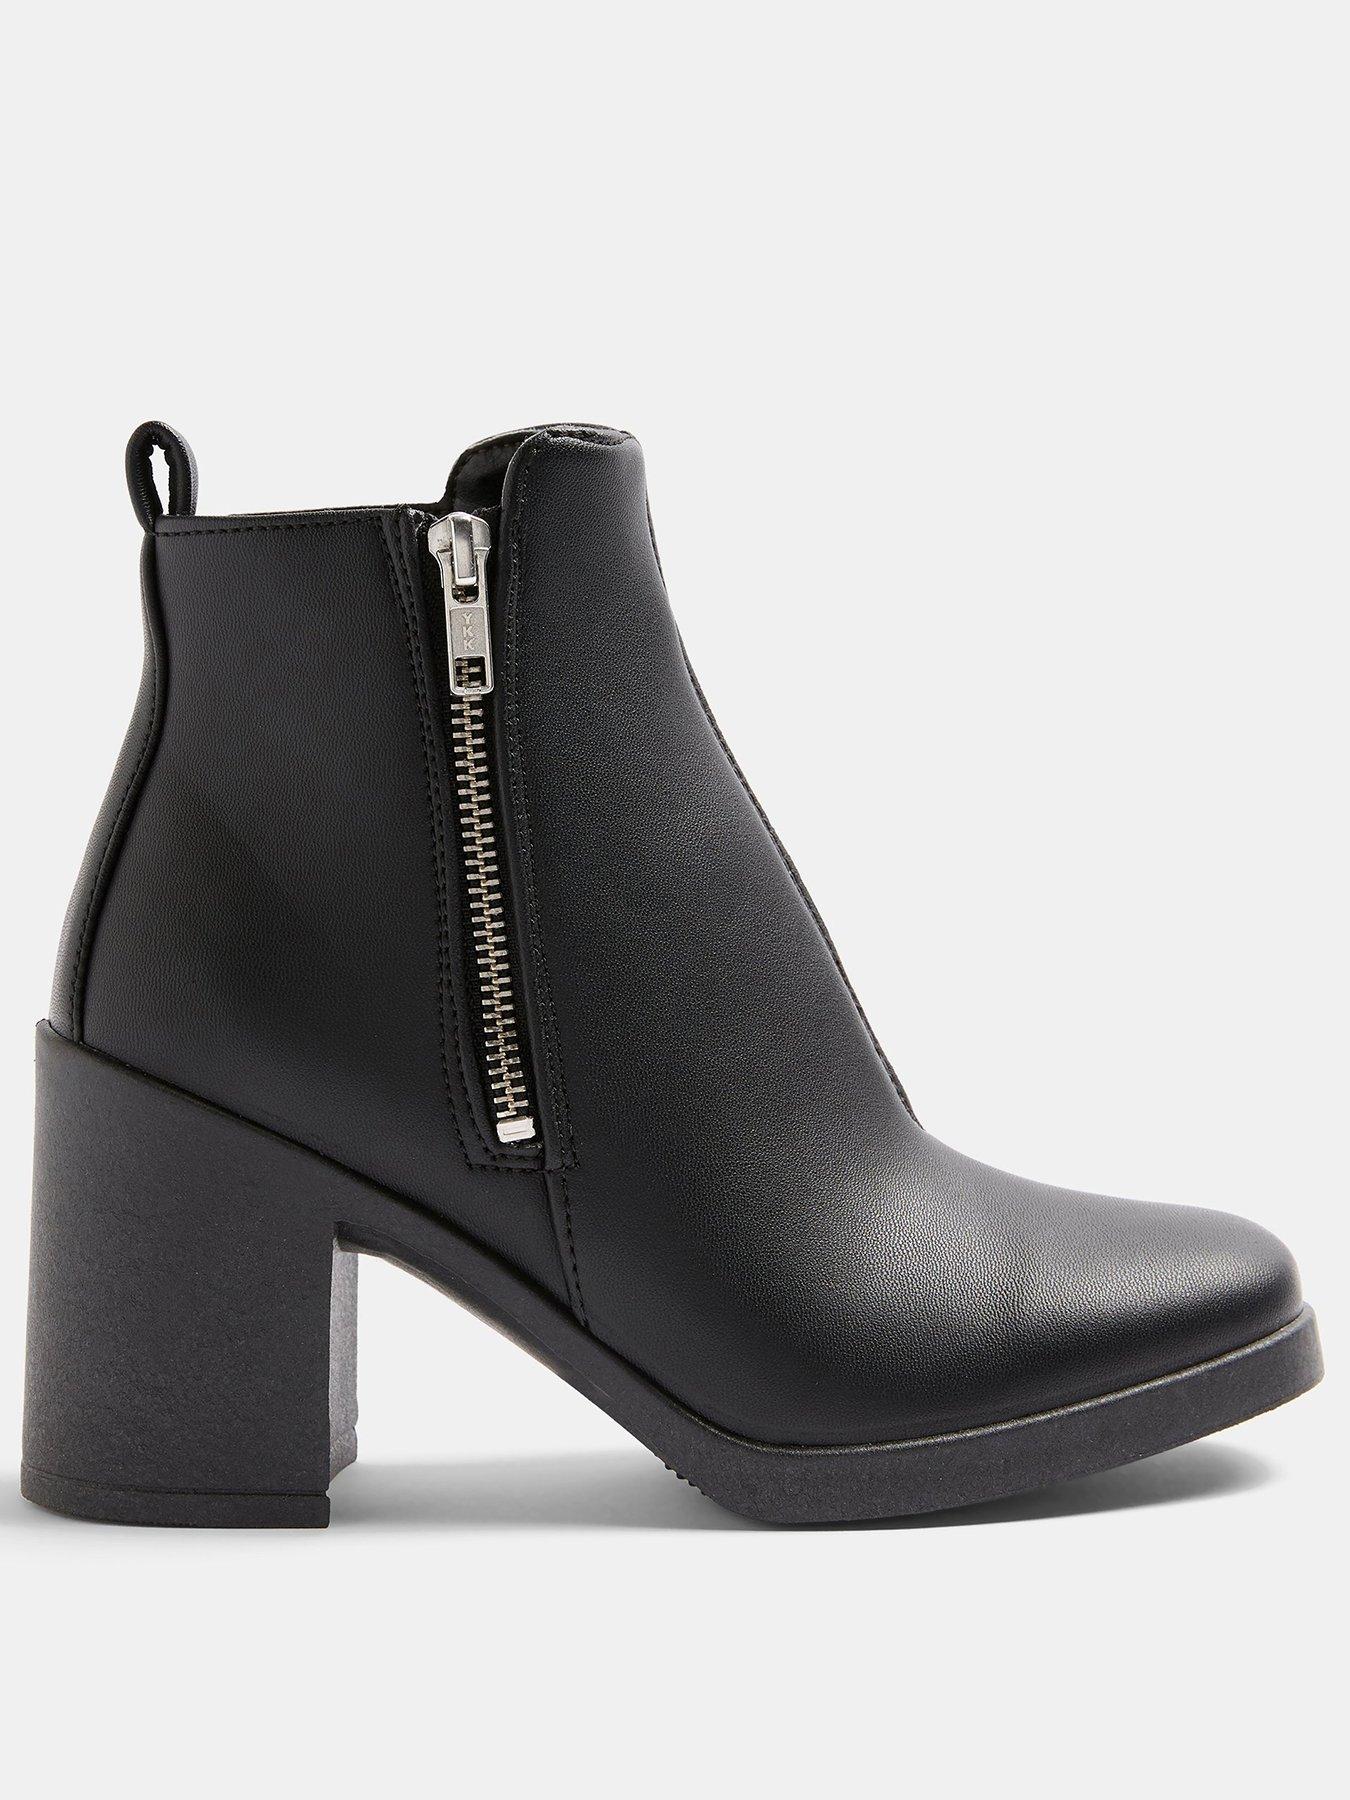 Topshop | Boots | Shoes \u0026 boots | Women 